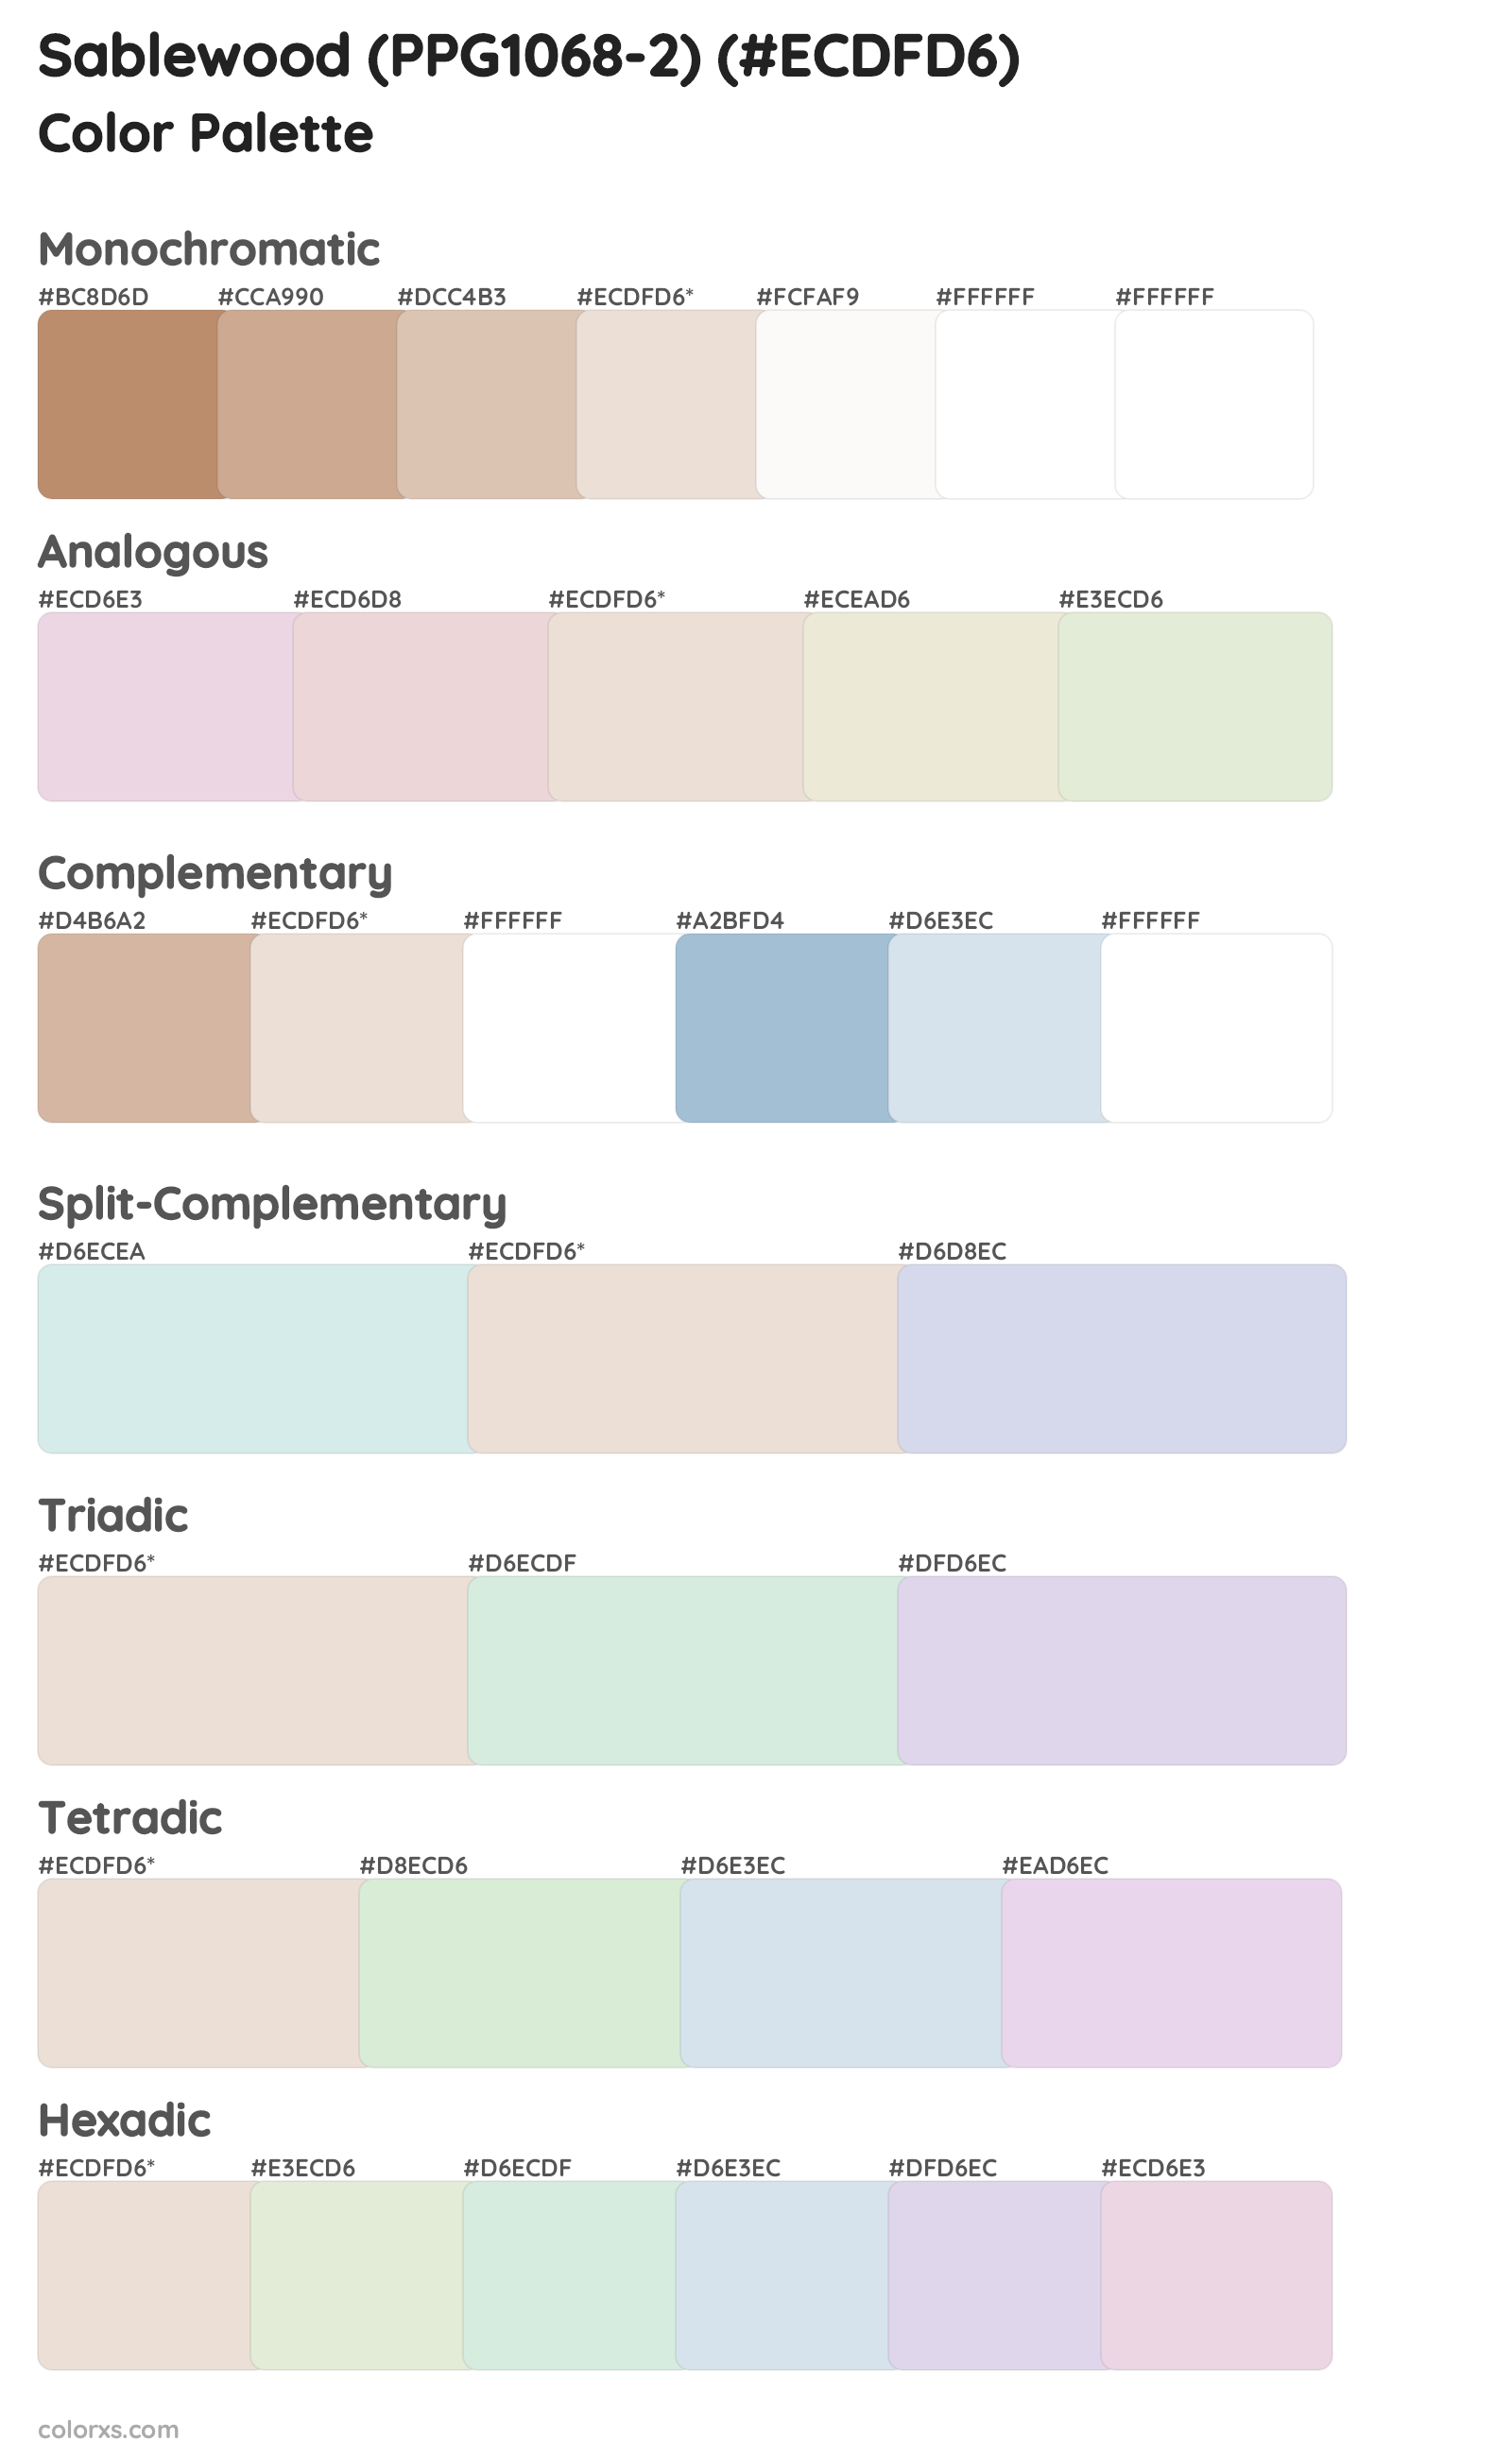 Sablewood (PPG1068-2) Color Scheme Palettes